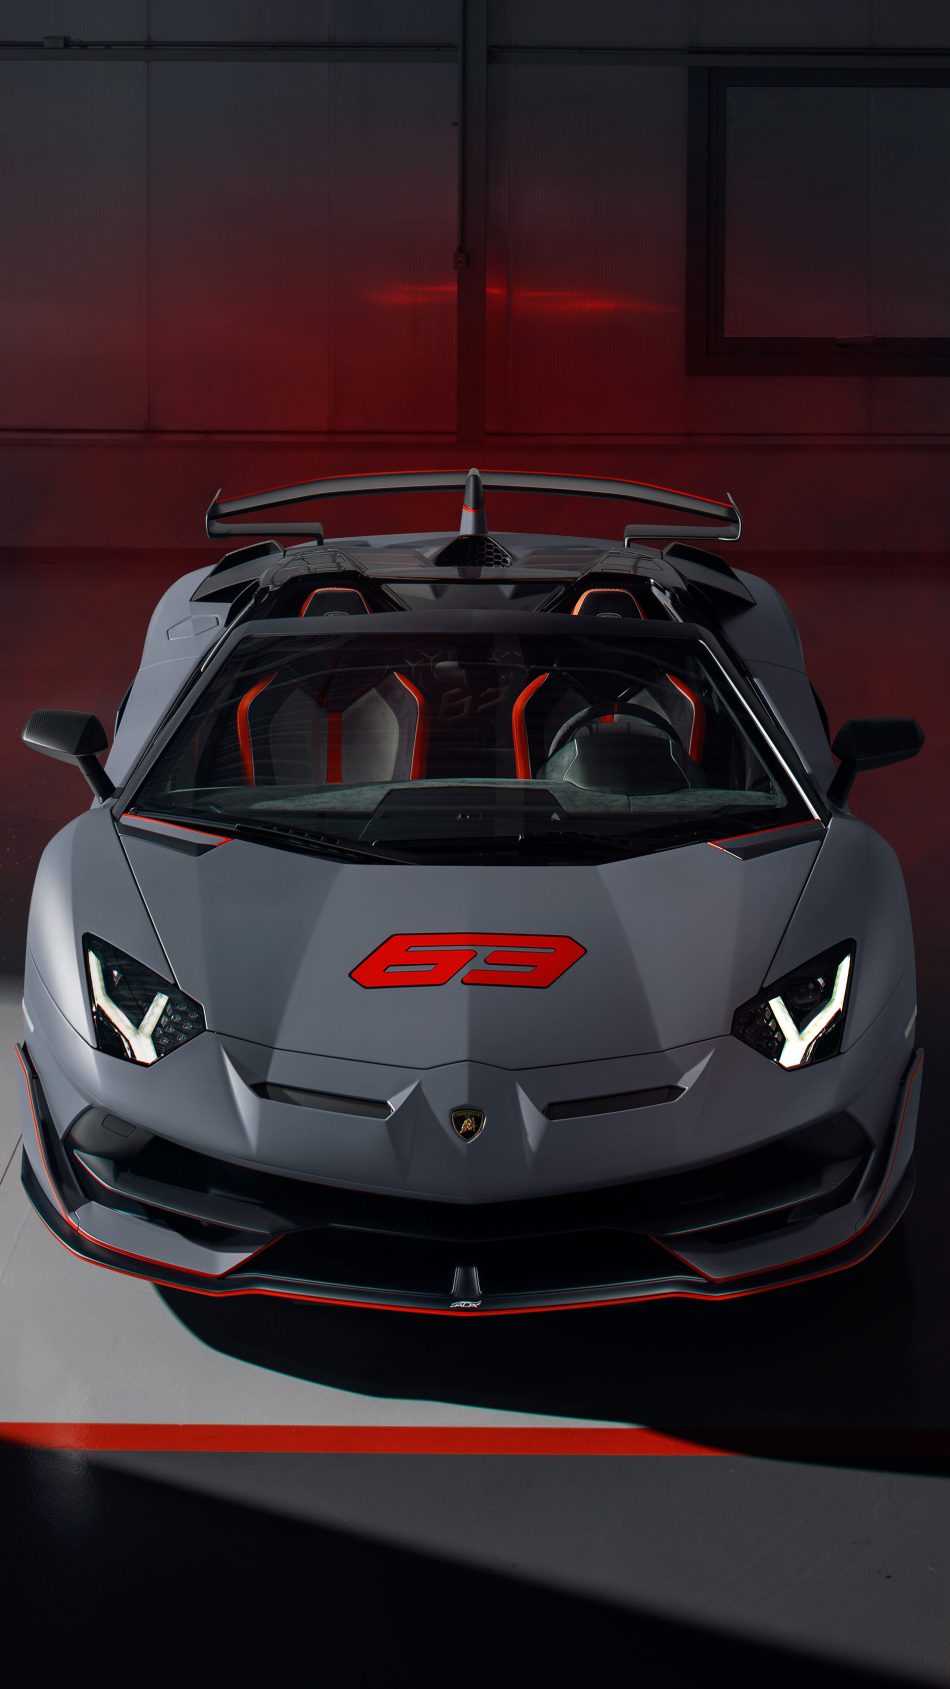 Wallpaper Of Lamborghini Aventador